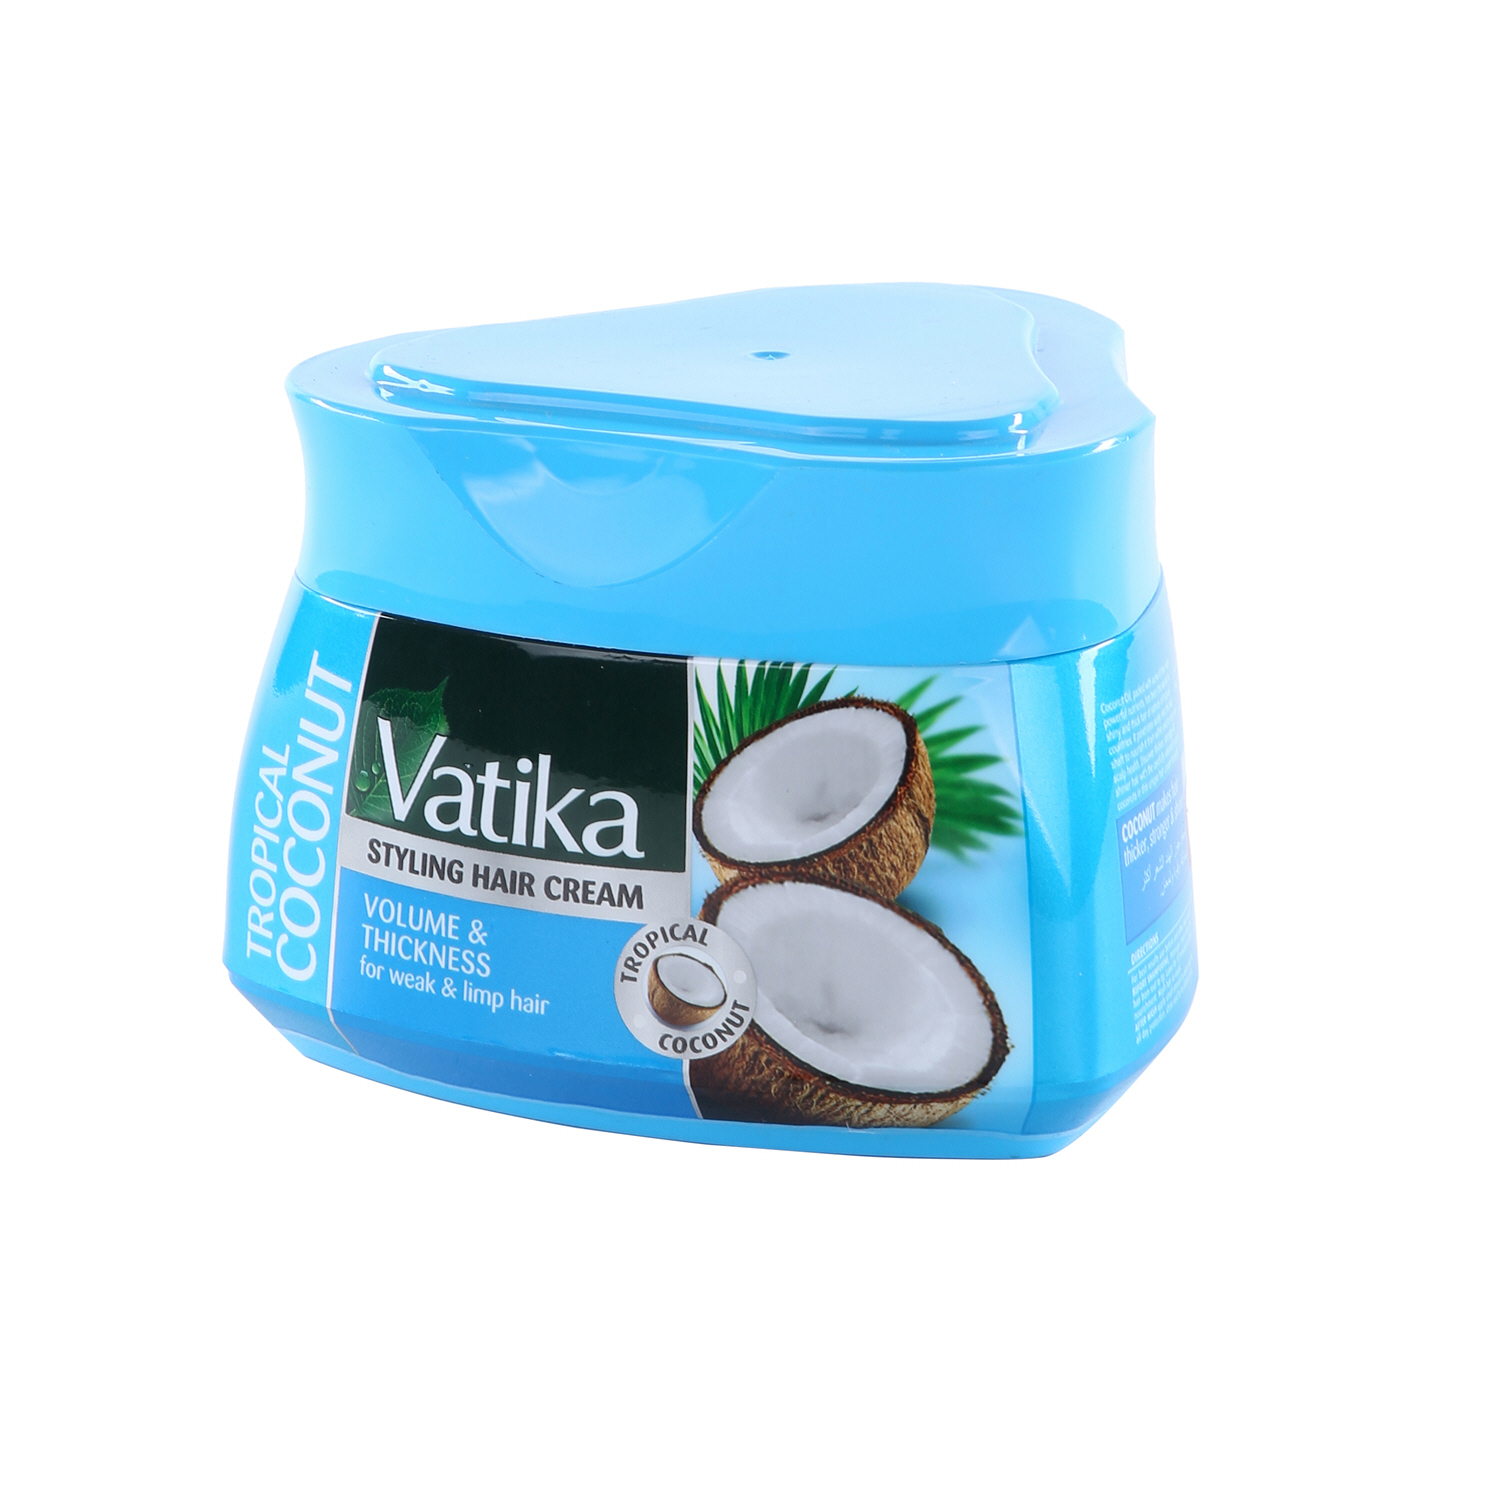 Dabur Vatika Hair Styling Cream Volume & Thickness for Weak Hair Tropical Coconut210ml